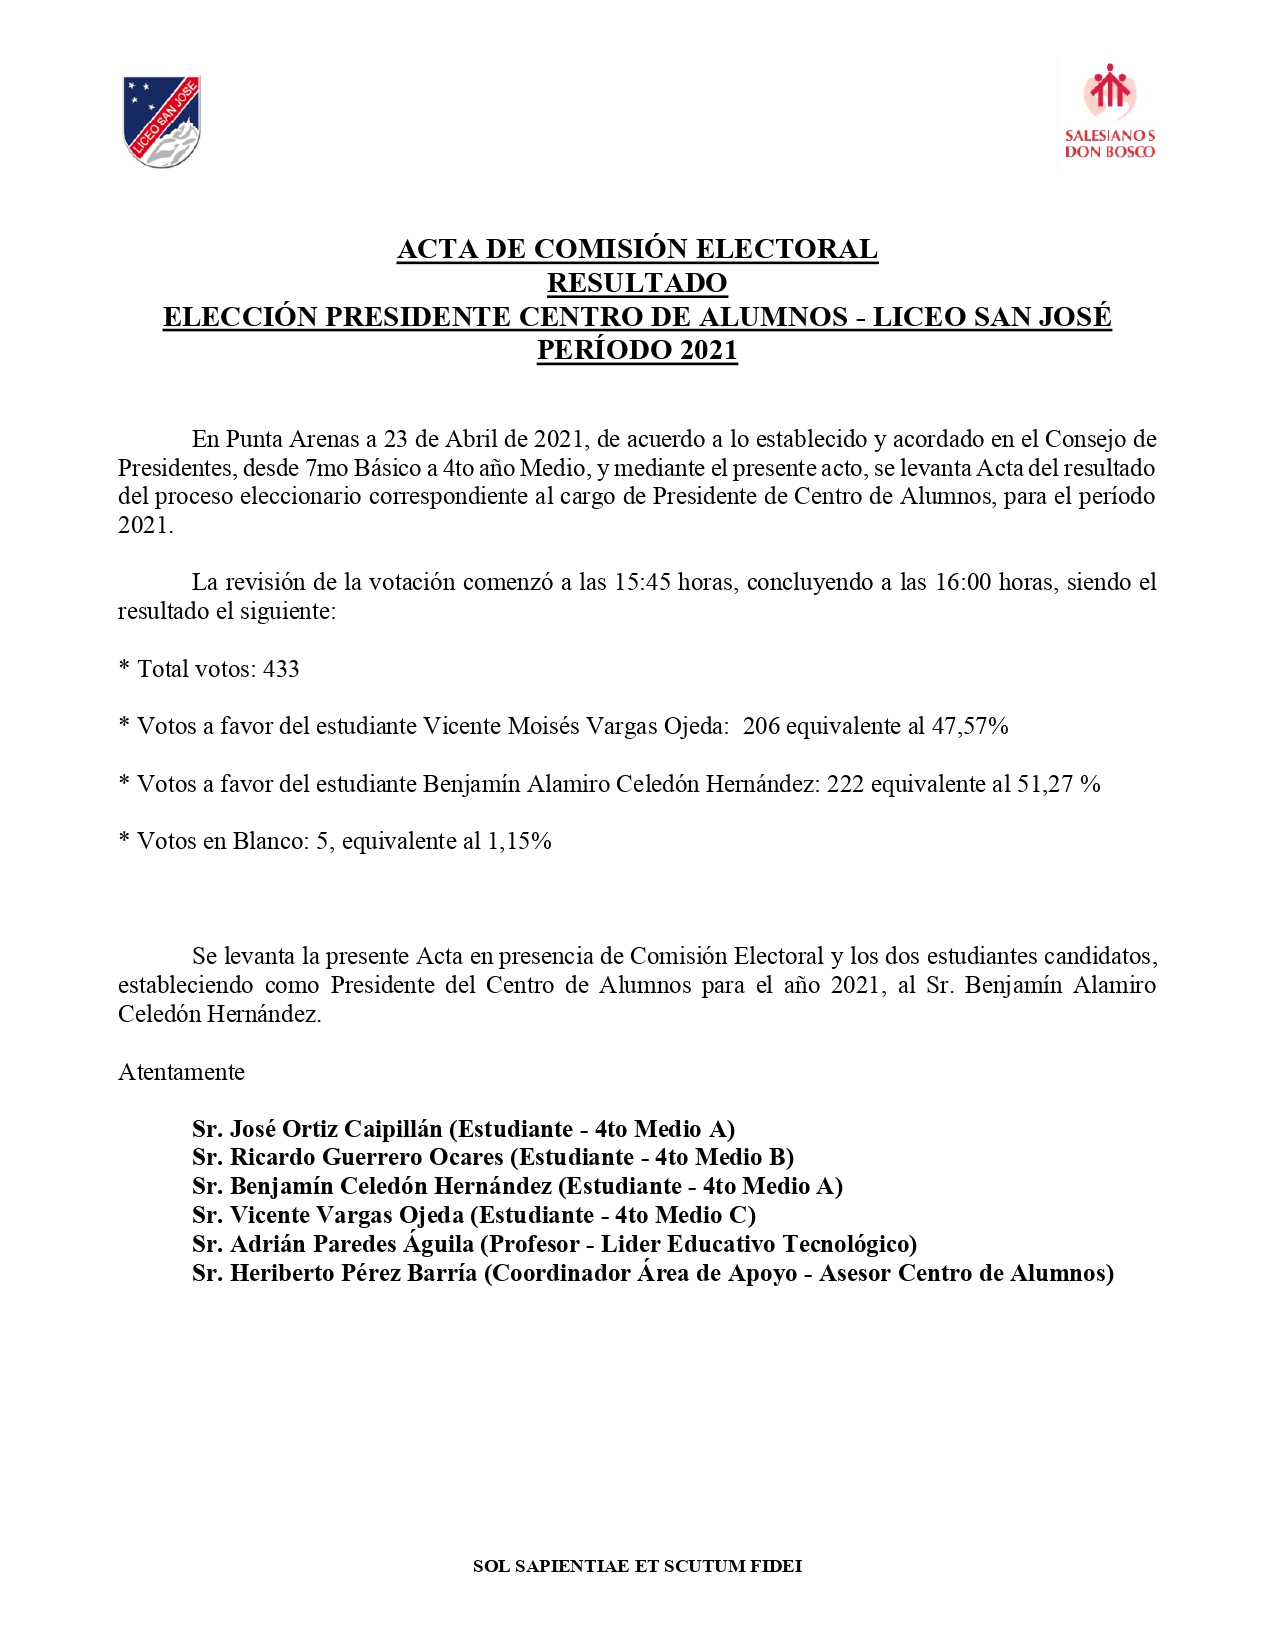 Acta Resultado Elección Presidente Centro de Alumnos 2021_page-0001.jpg